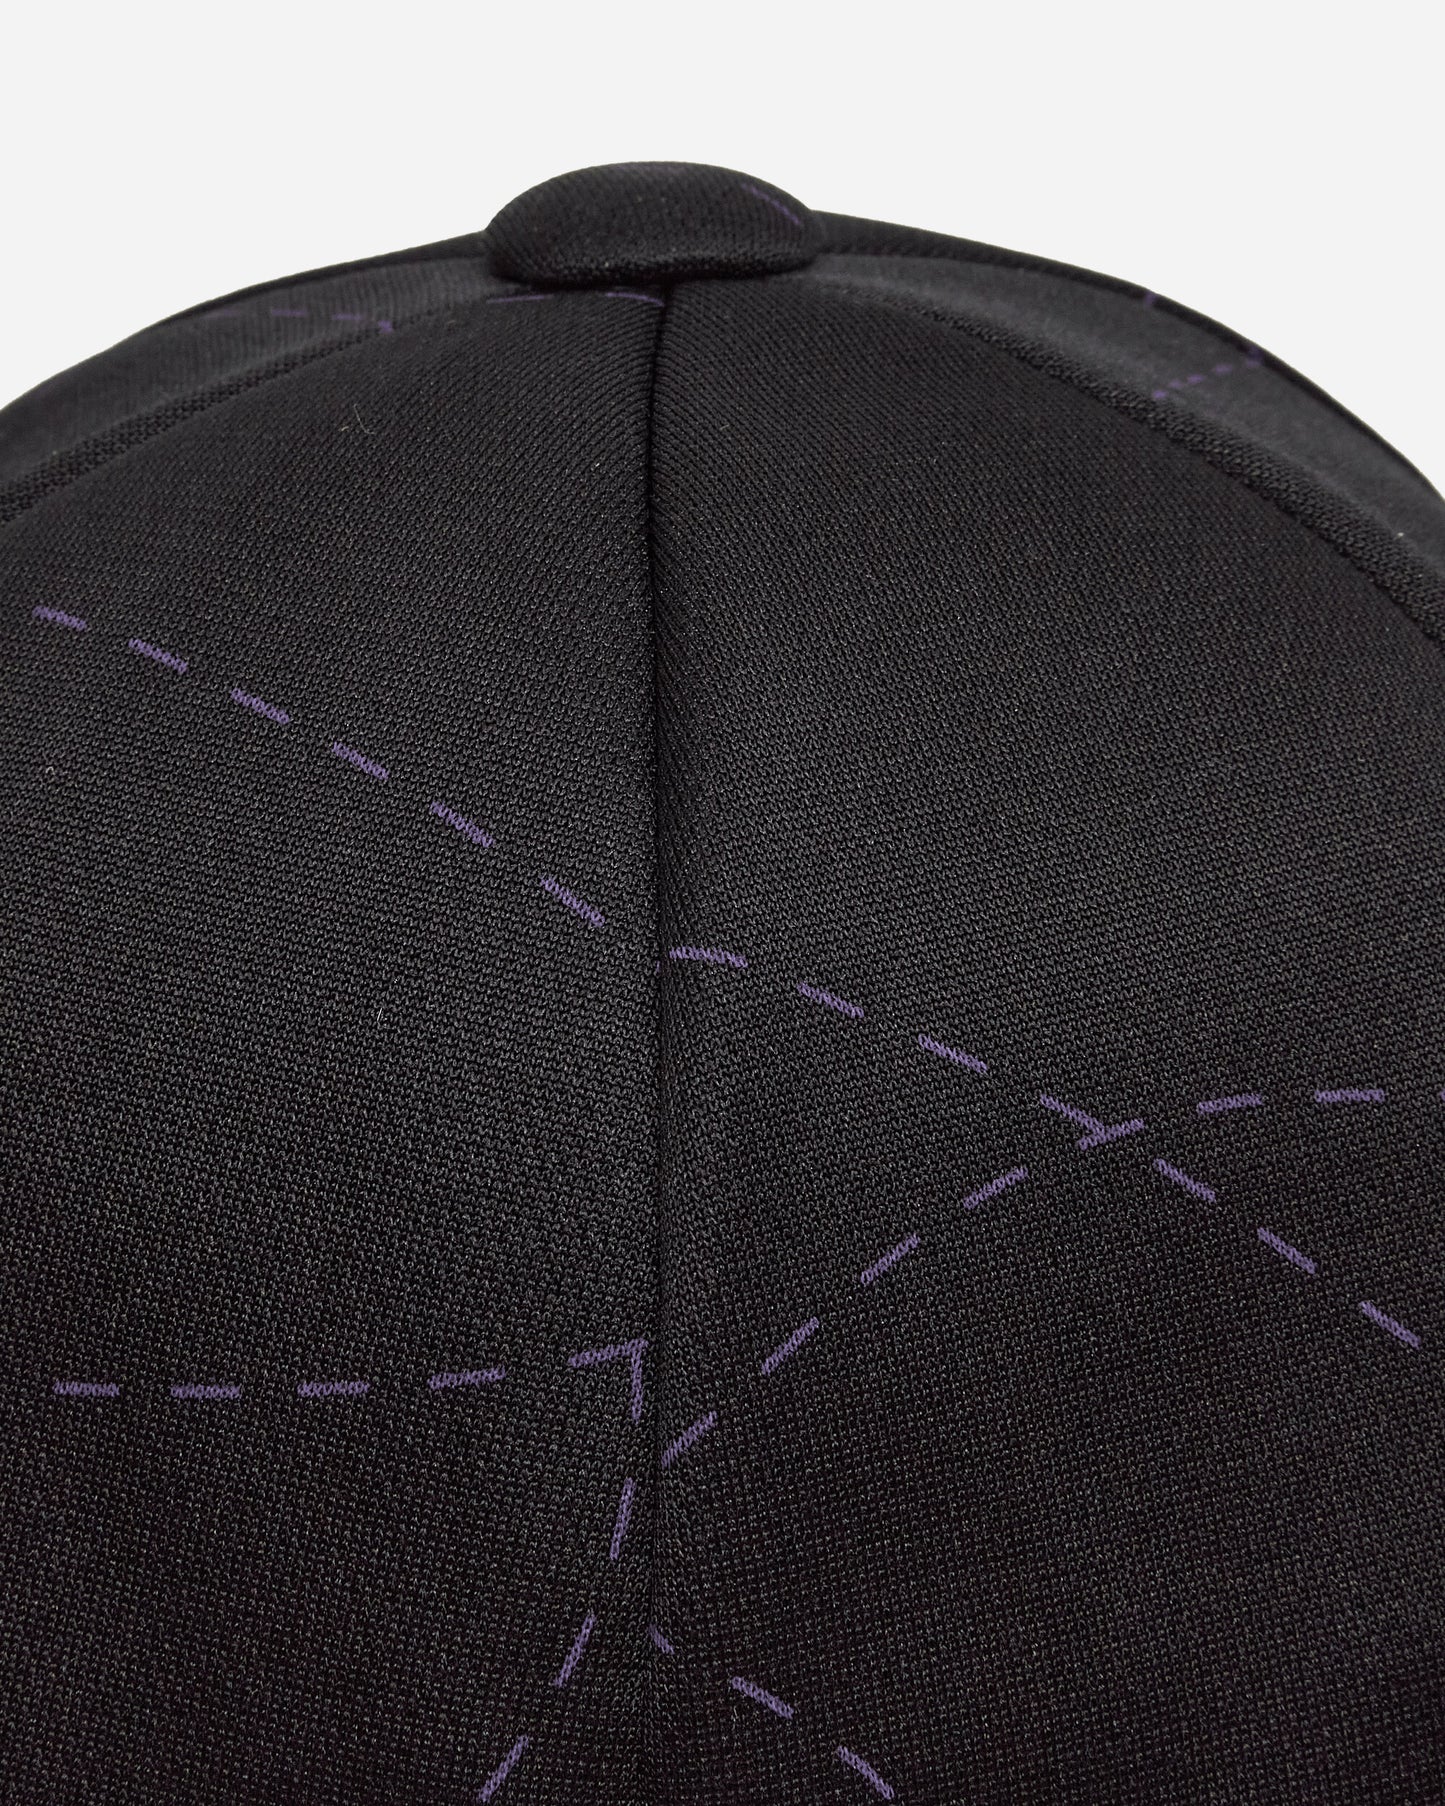 Needles Bermuda Hat Black Hats Bucket MR610 B